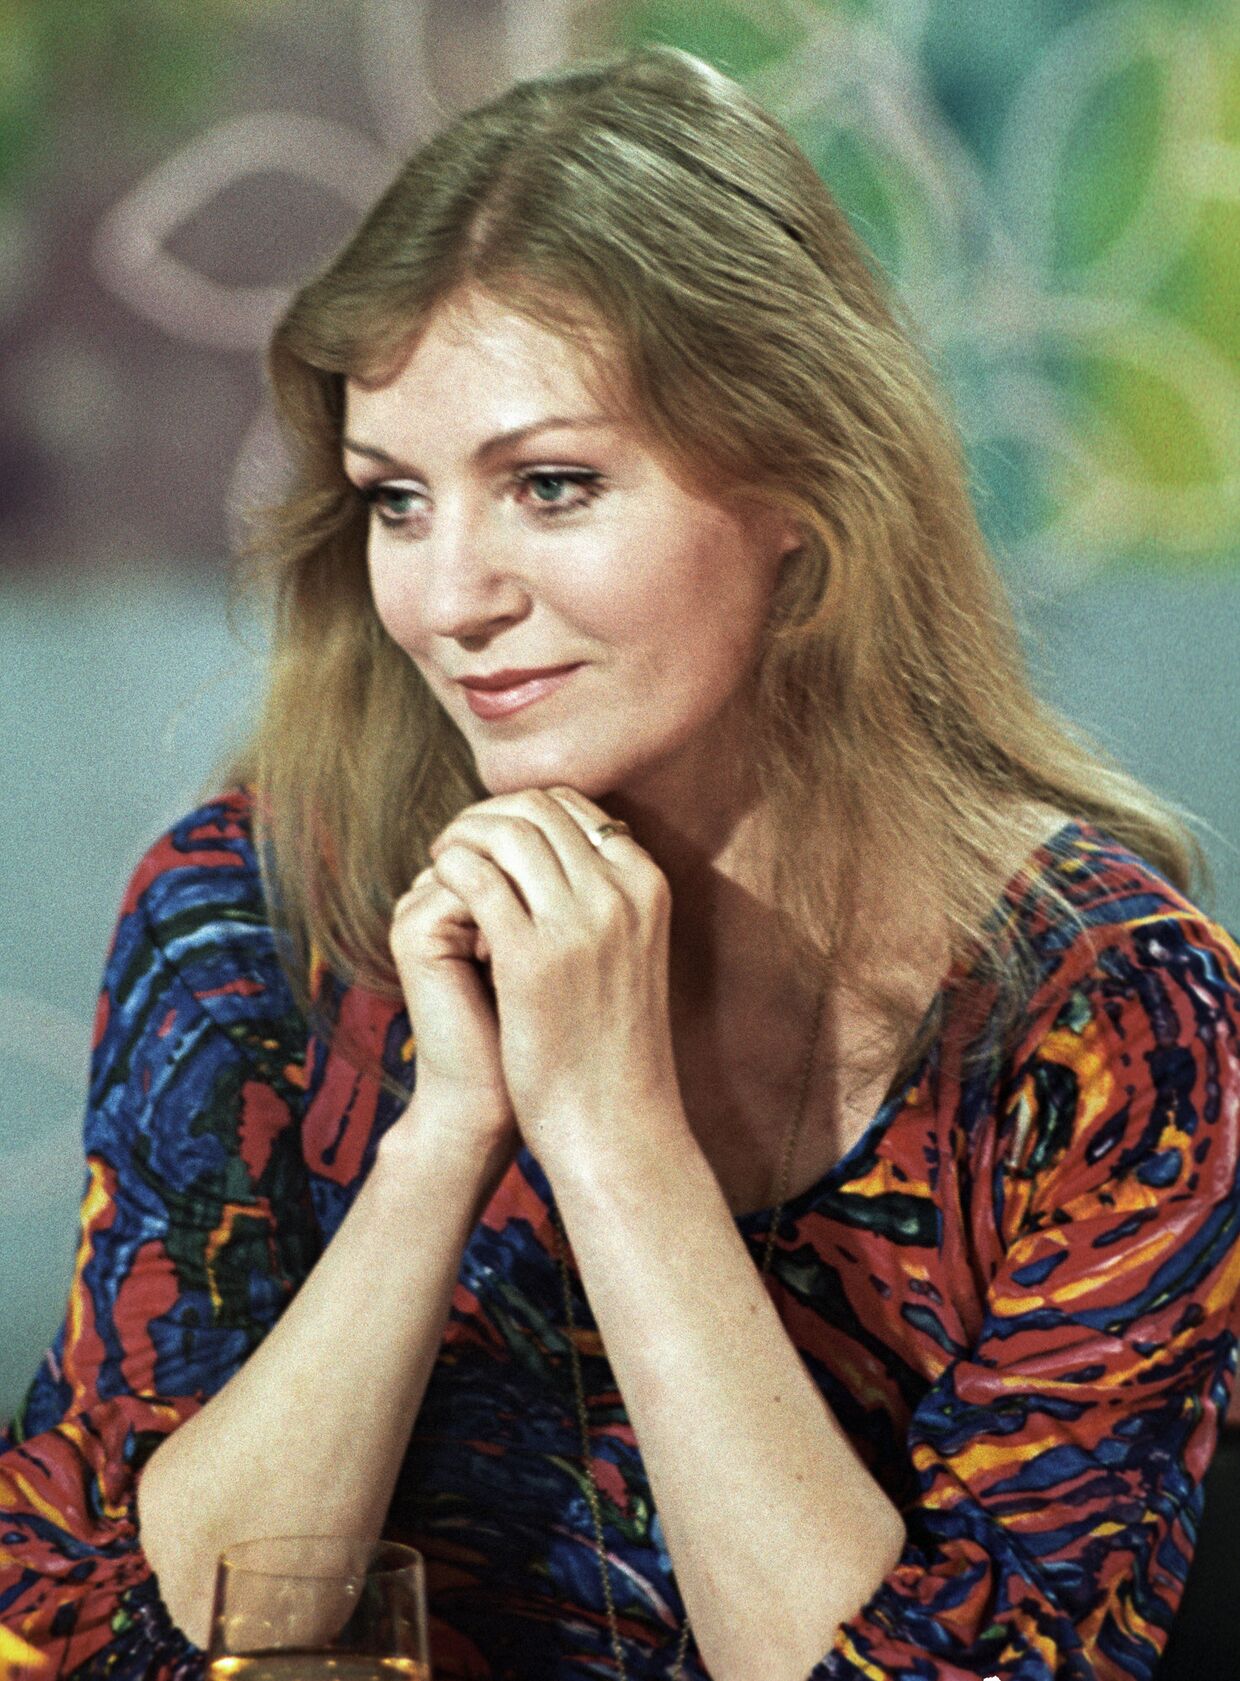 Польская певица Анна Герман